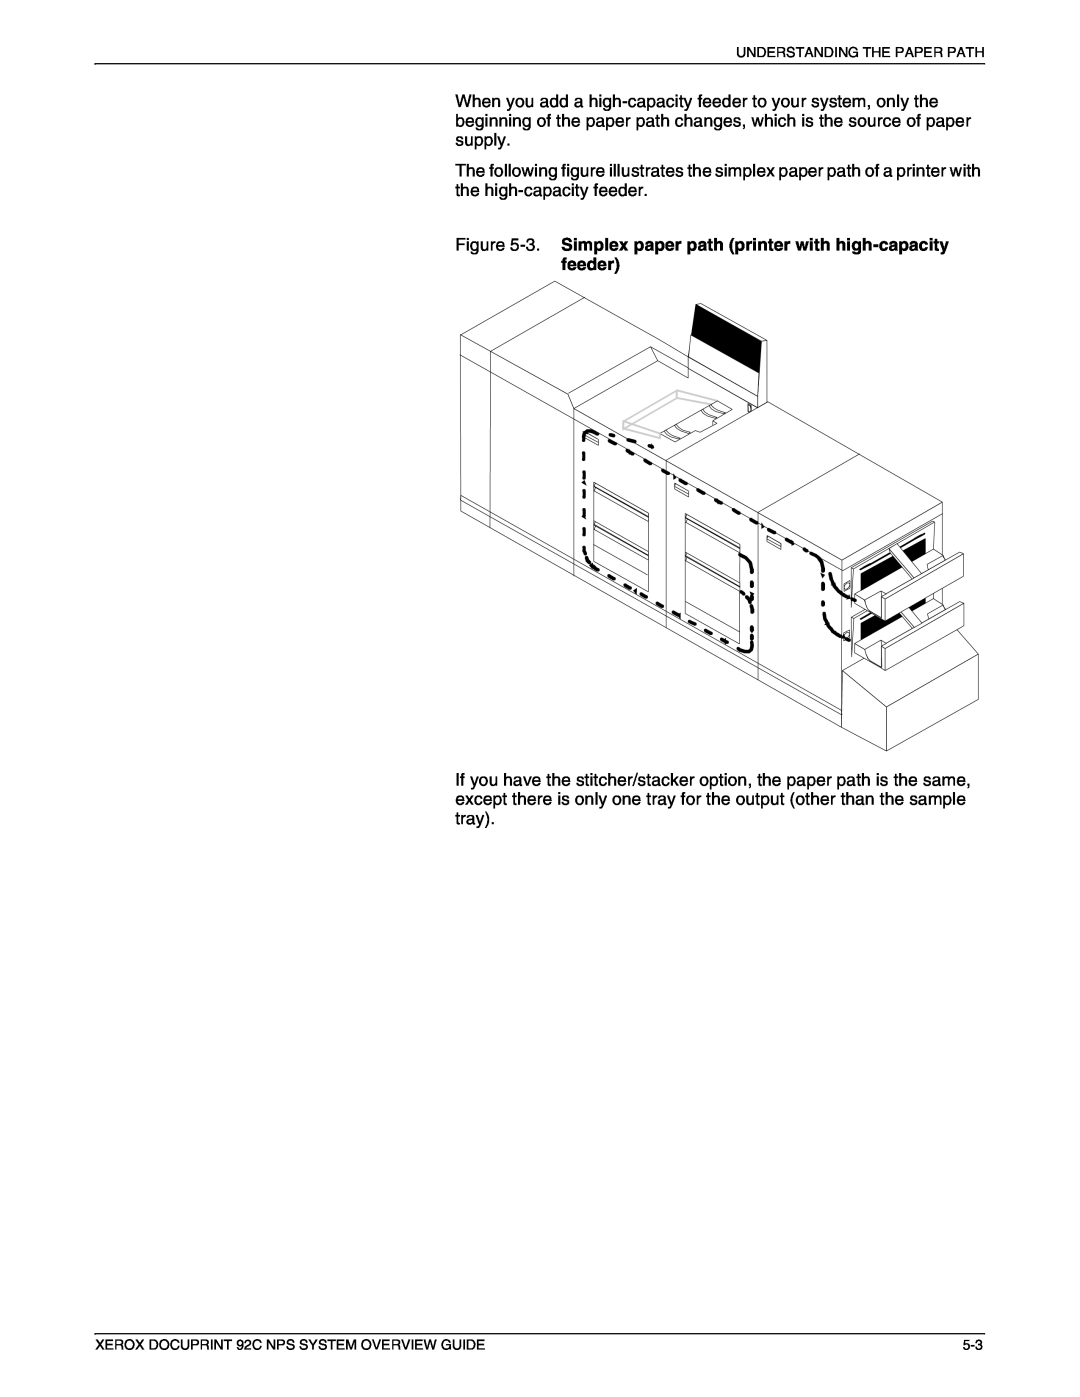 Xerox 92C NPS manual 3. Simplex paper path printer with high-capacity feeder 